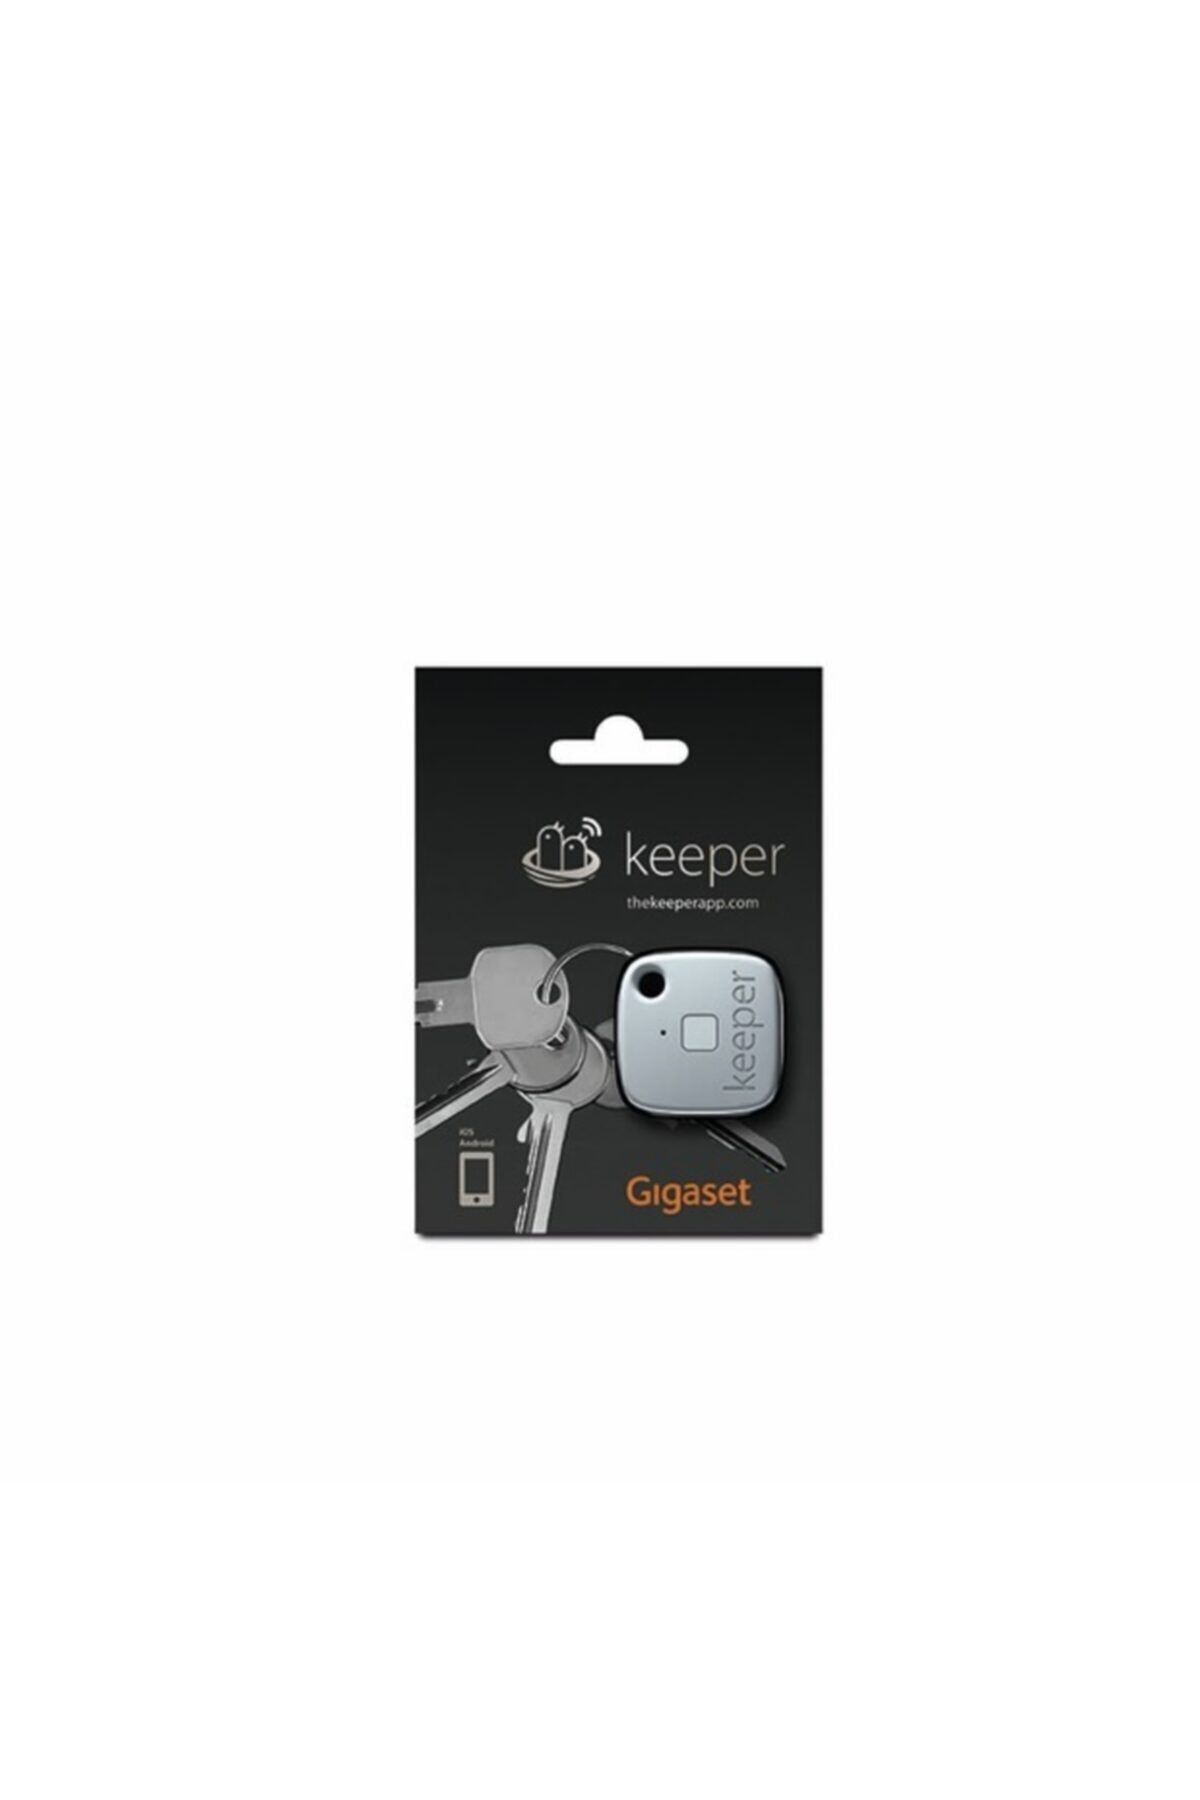 Gigaset Keeper Led Işıklı Bluetooth 4.0 Akıllı Takip Cihazı (siyah)